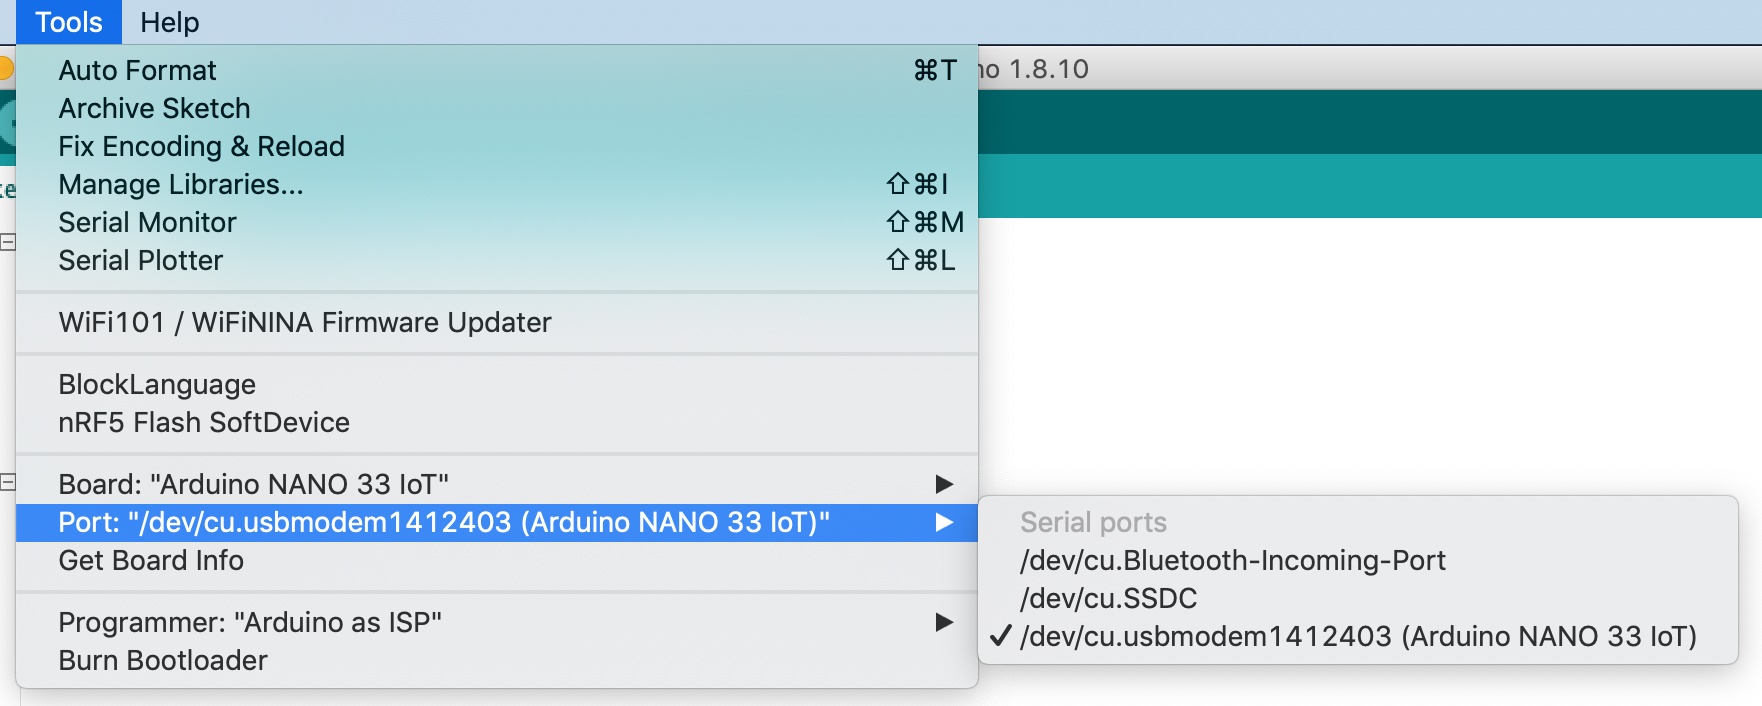 Screenshot of the Arduino Tools menu showing the Ports submenu